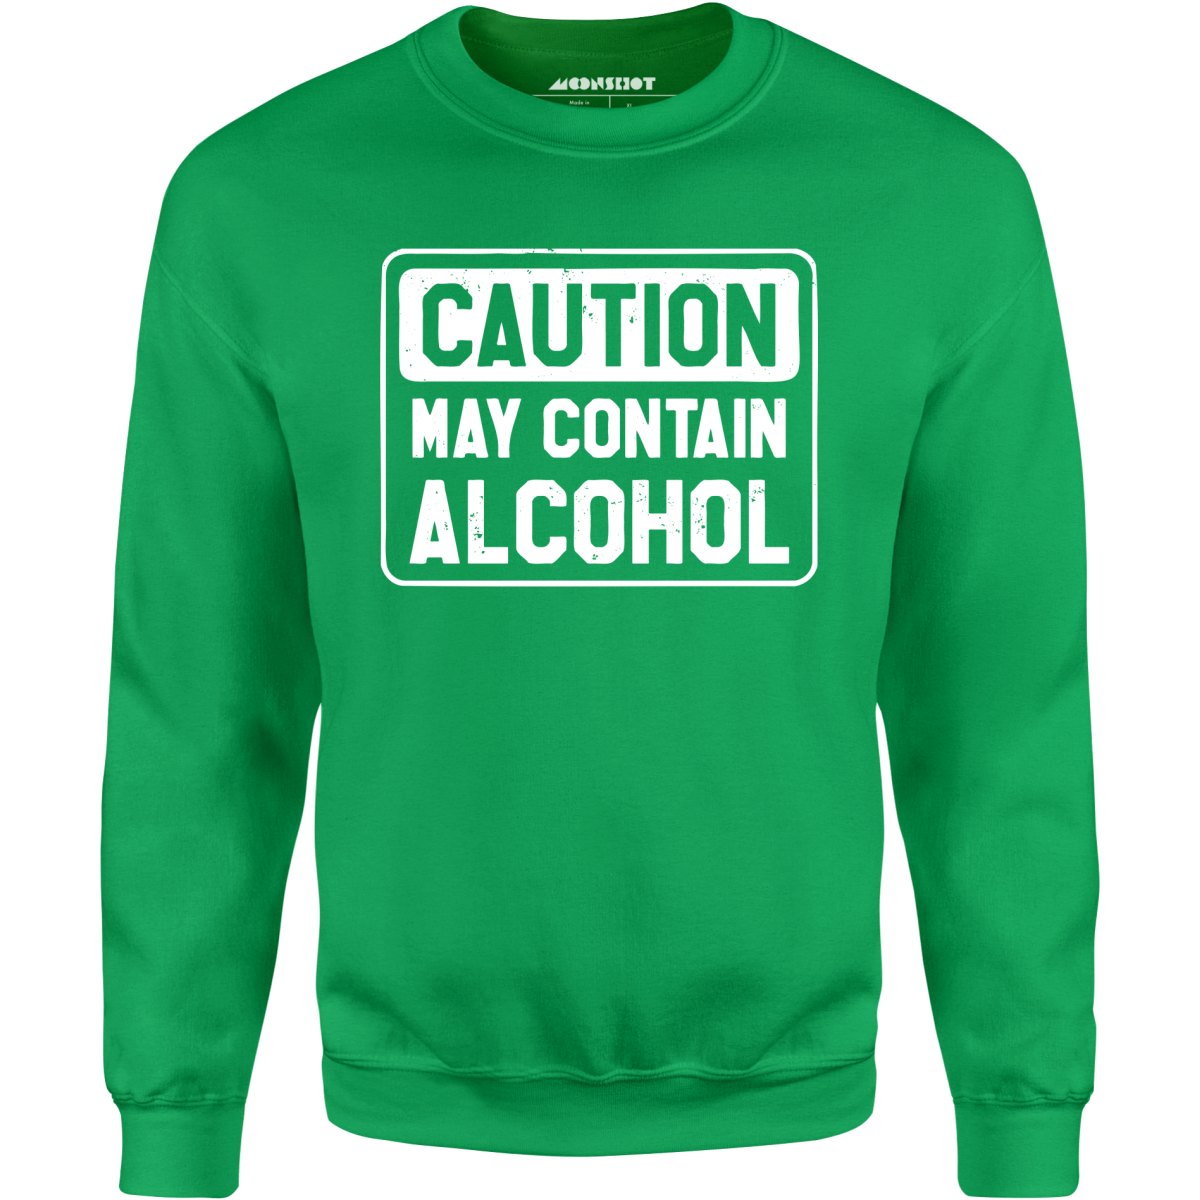 Caution May Contain Alcohol - Unisex Sweatshirt